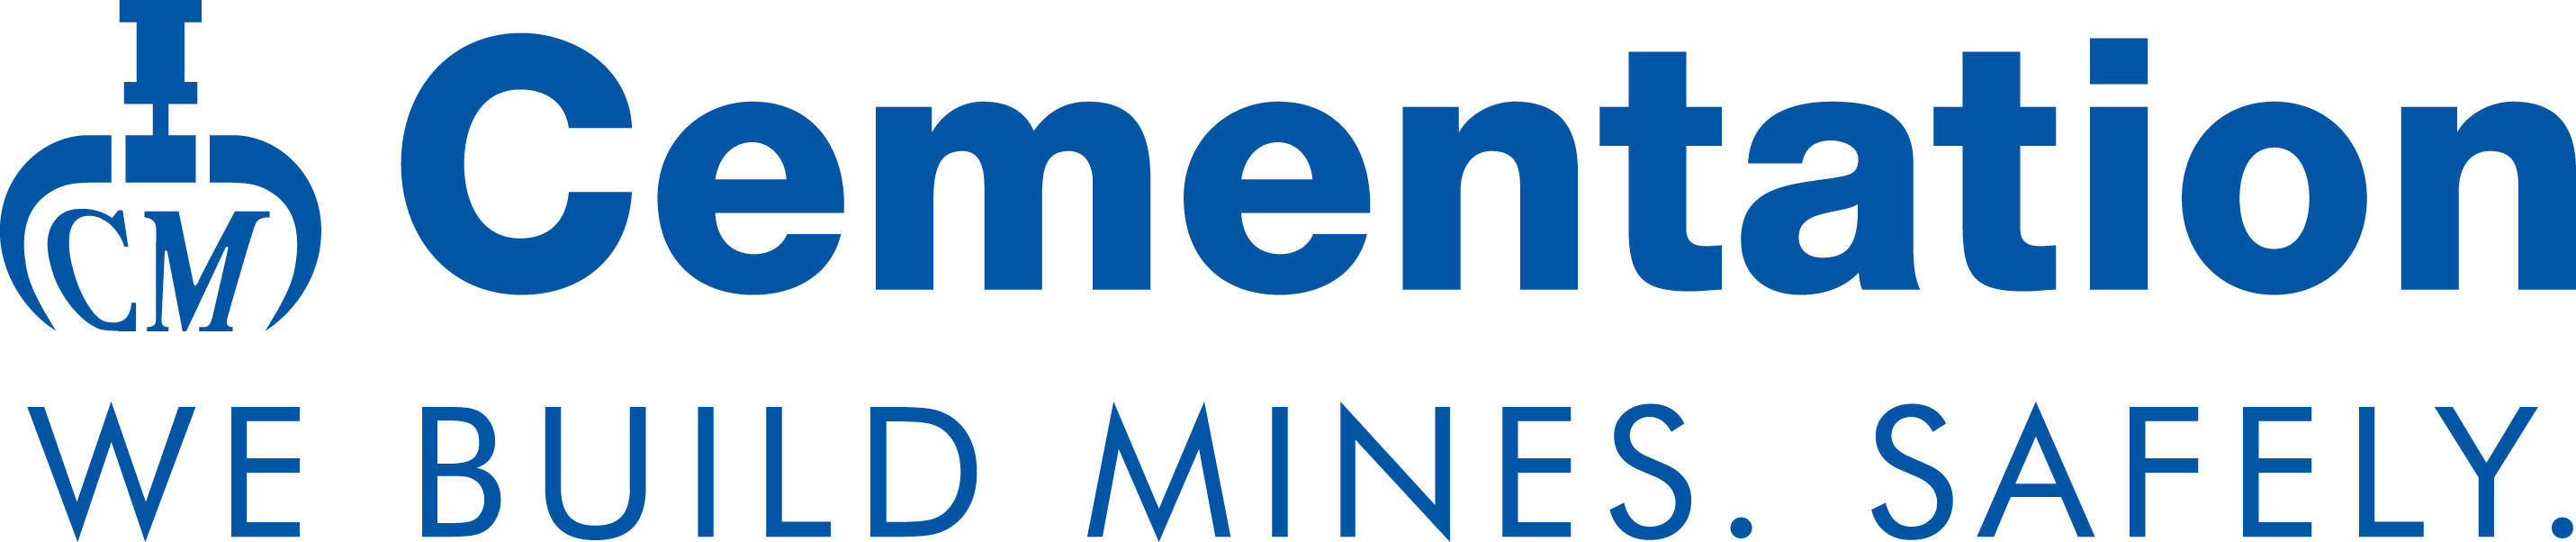 cementation logo